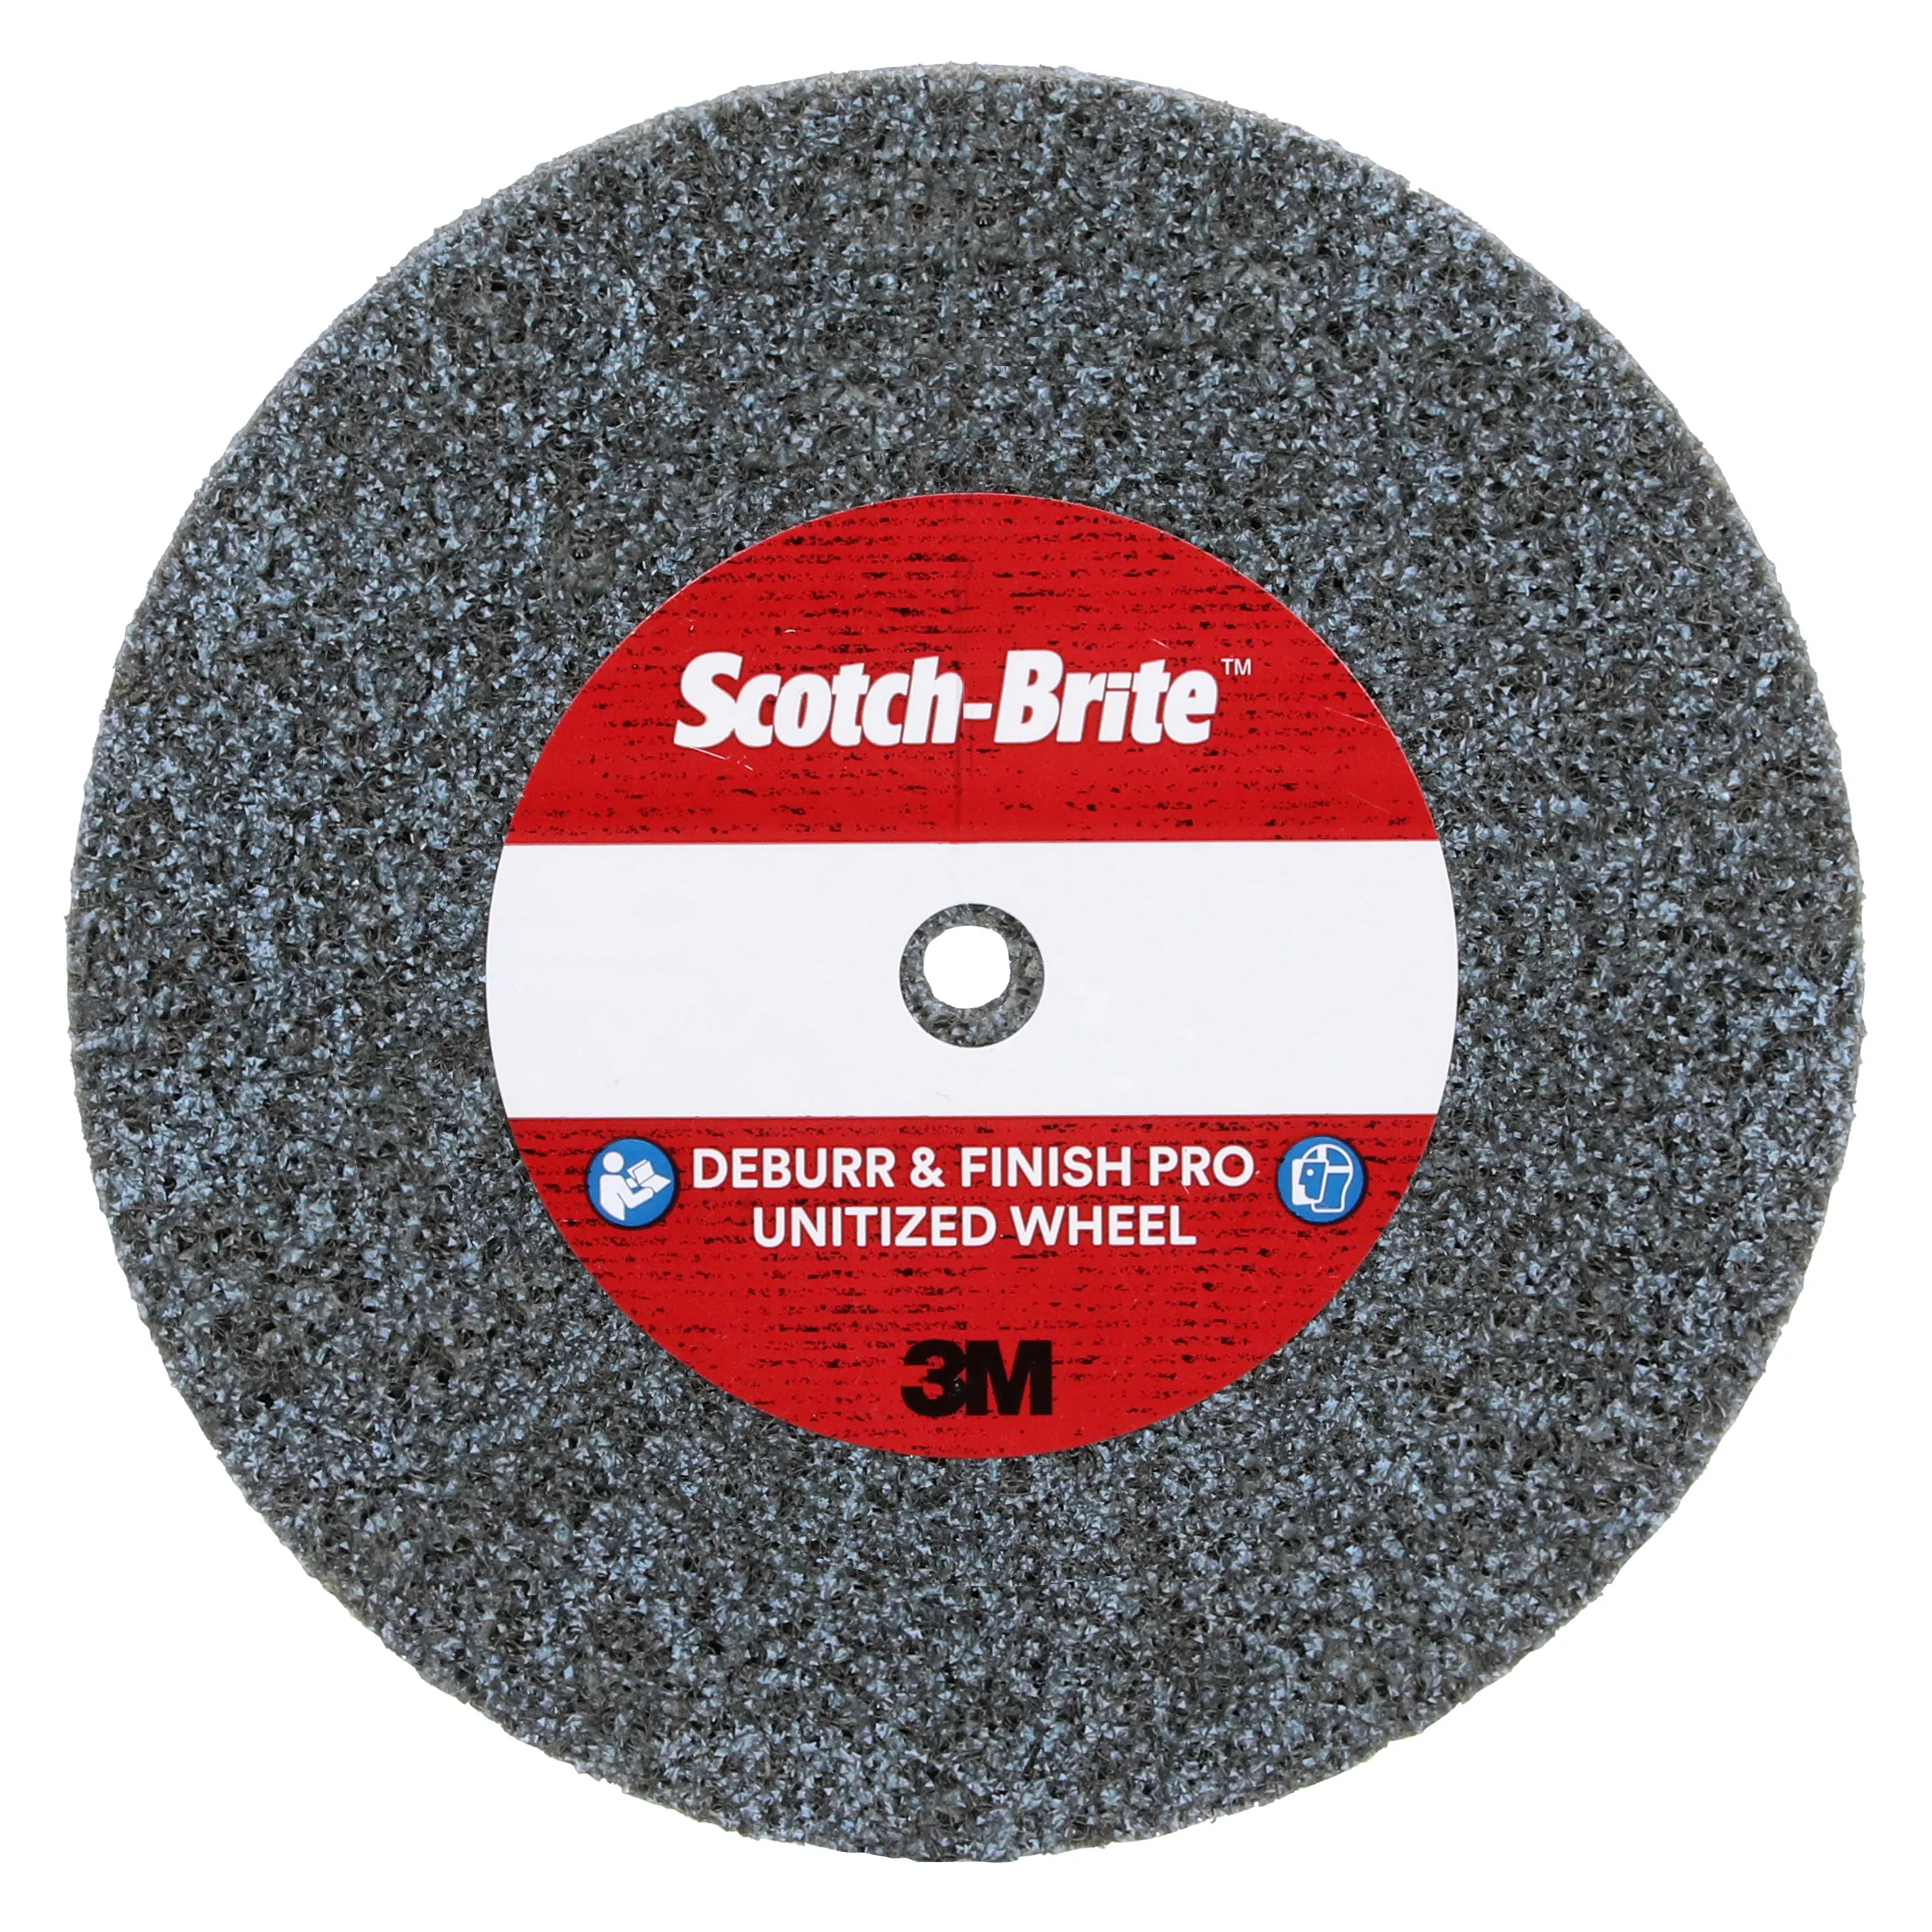 SKU 7100105530 | Scotch-Brite™ Deburr & Finish Pro Unitized Wheel